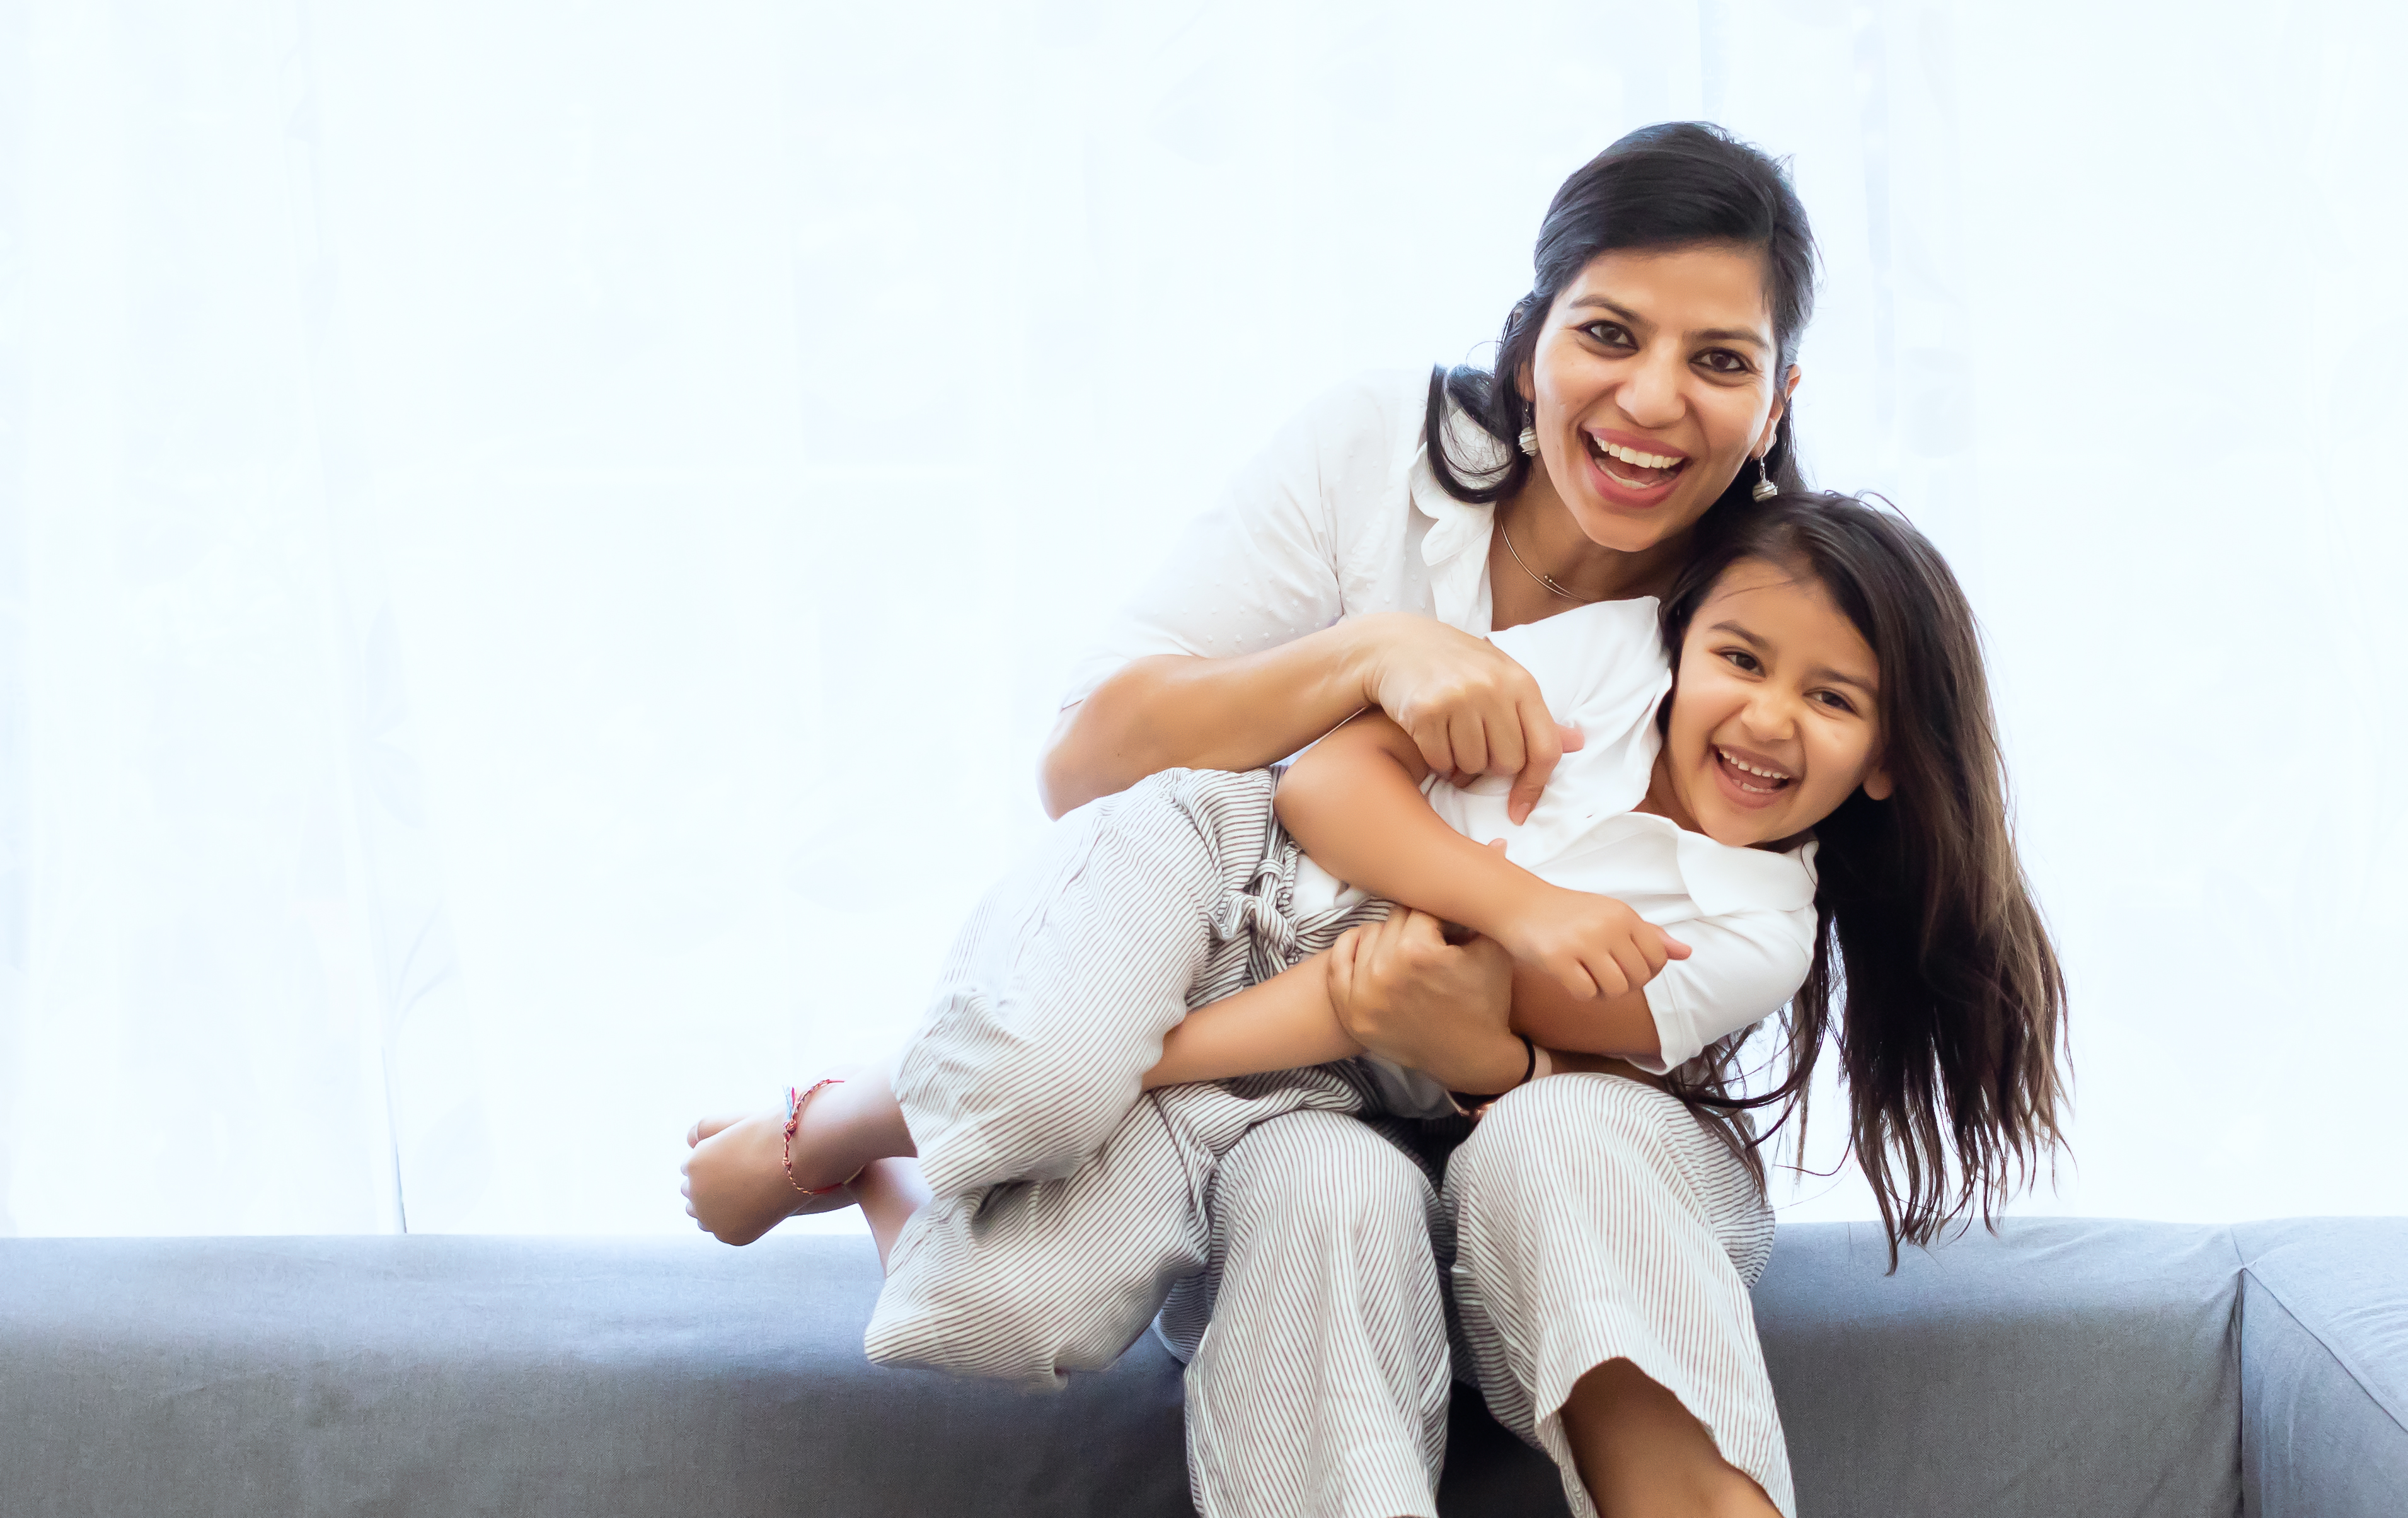 Asuransi kesehatan keluarga menjamin kesehatan setiap anggota keluarga